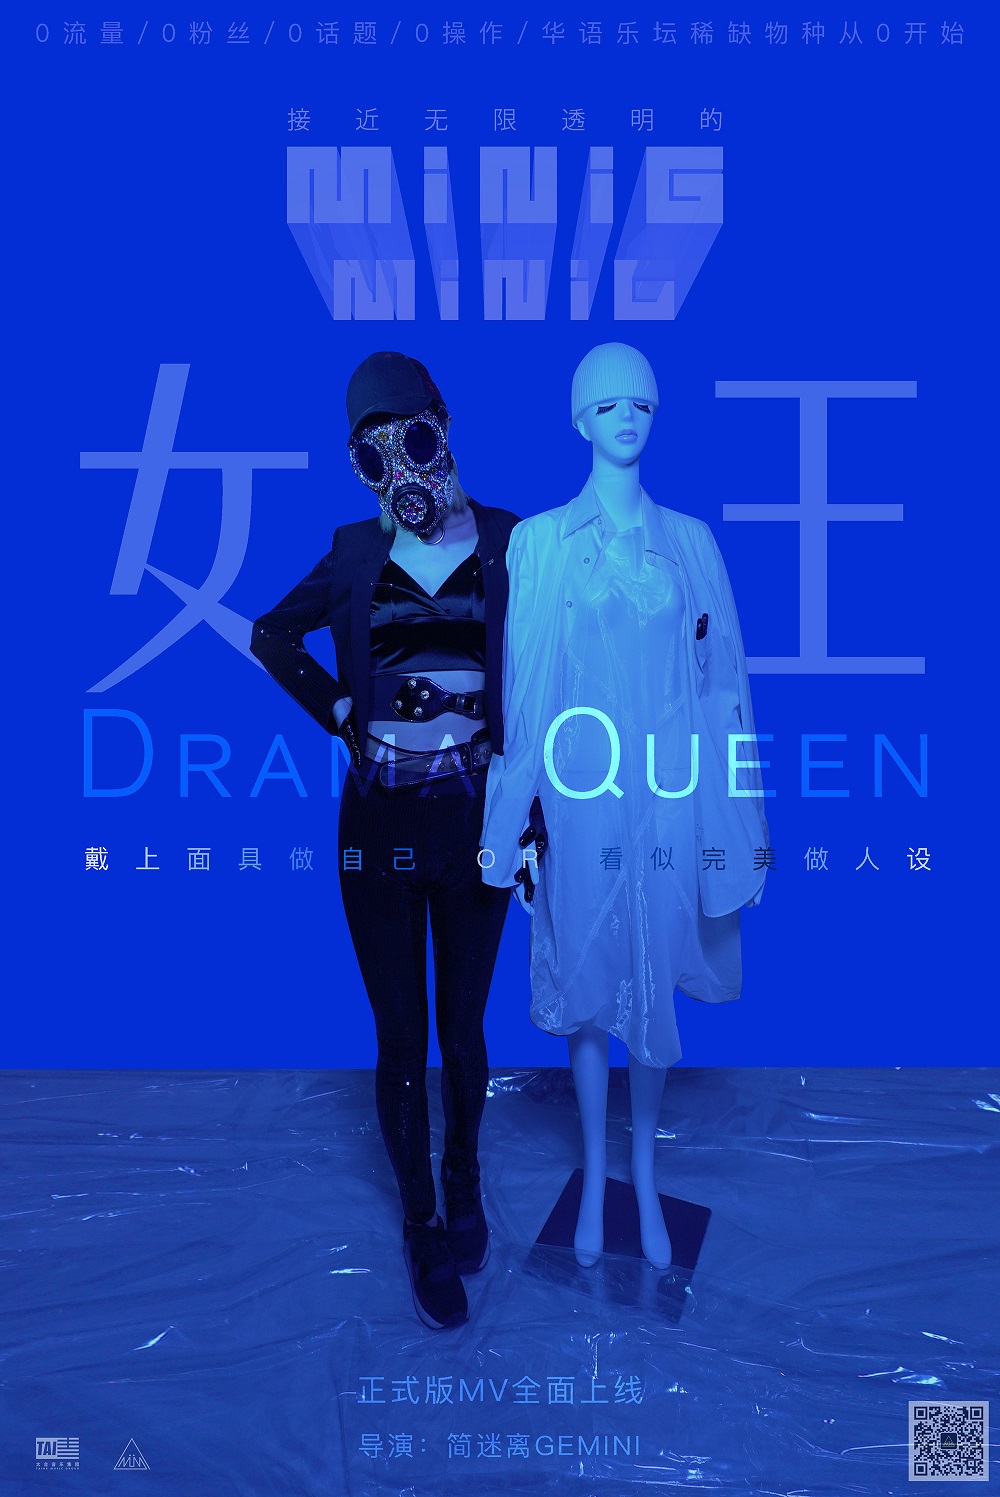 MiniG迷你机用“无限透明”对抗“虚拟” 《女王Drama Queen》MV硬核上线